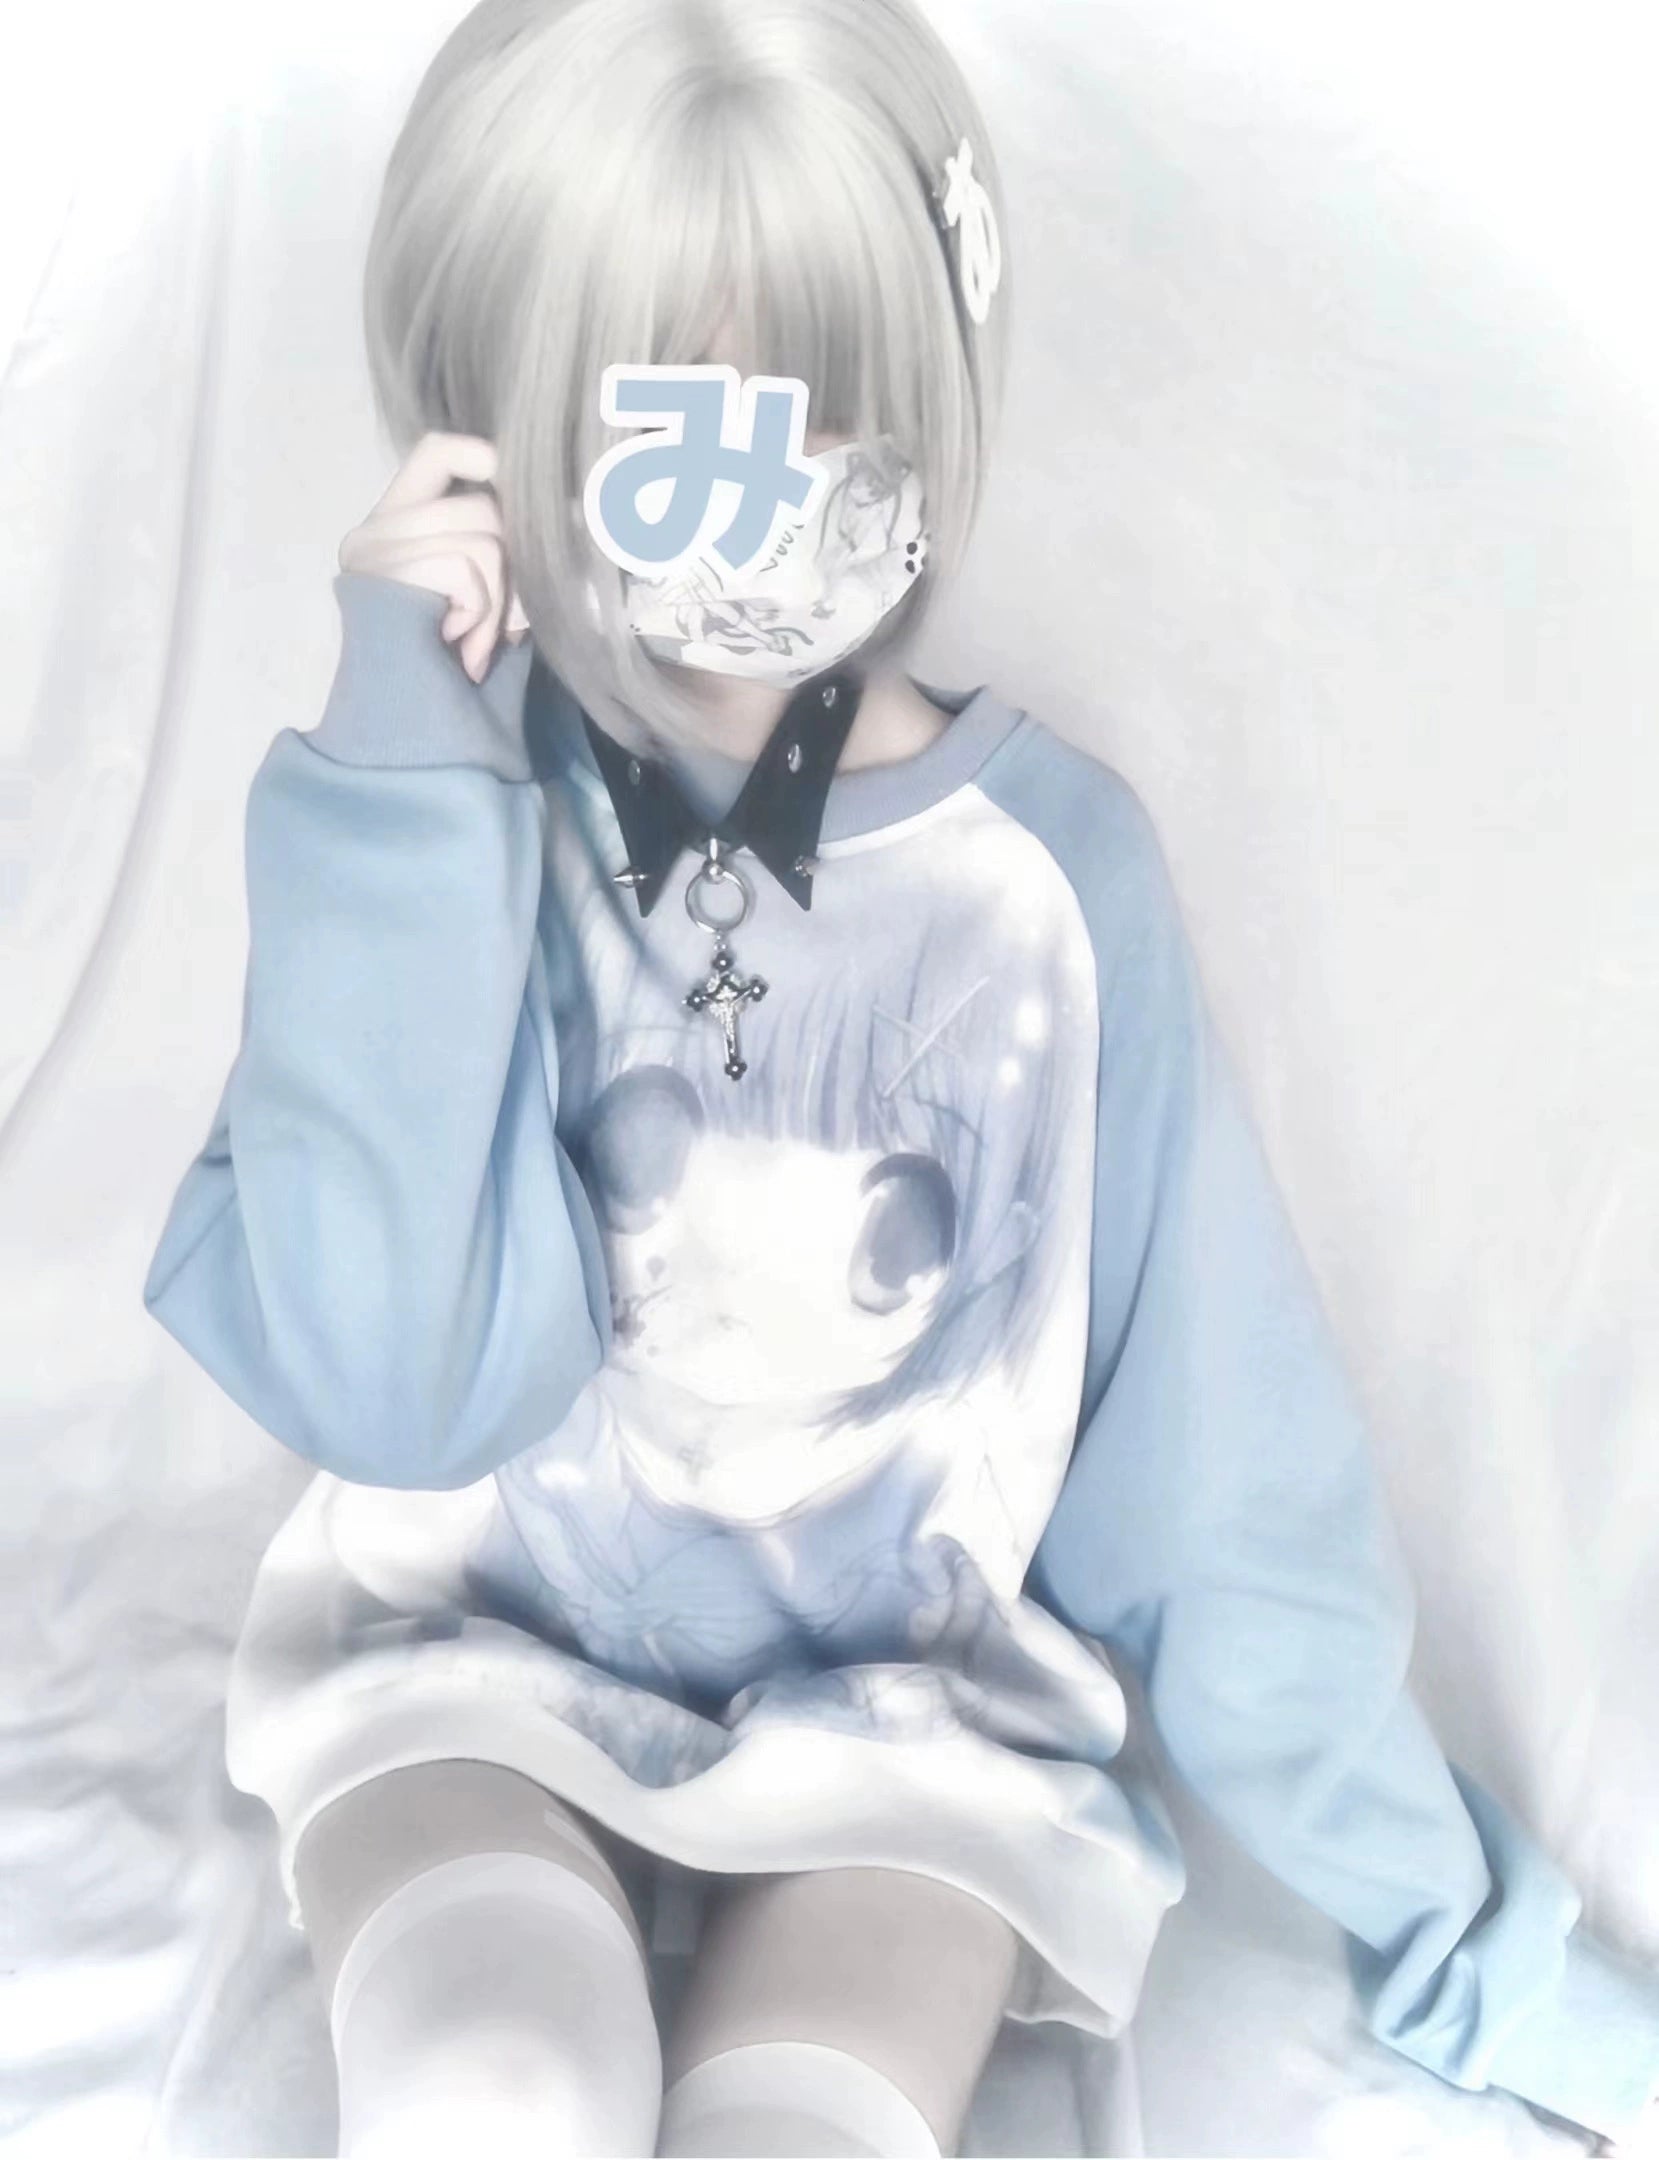 Jirai Kei Blue Sweatshirt Anime Girl Printed Sweatshirt 33326:430984